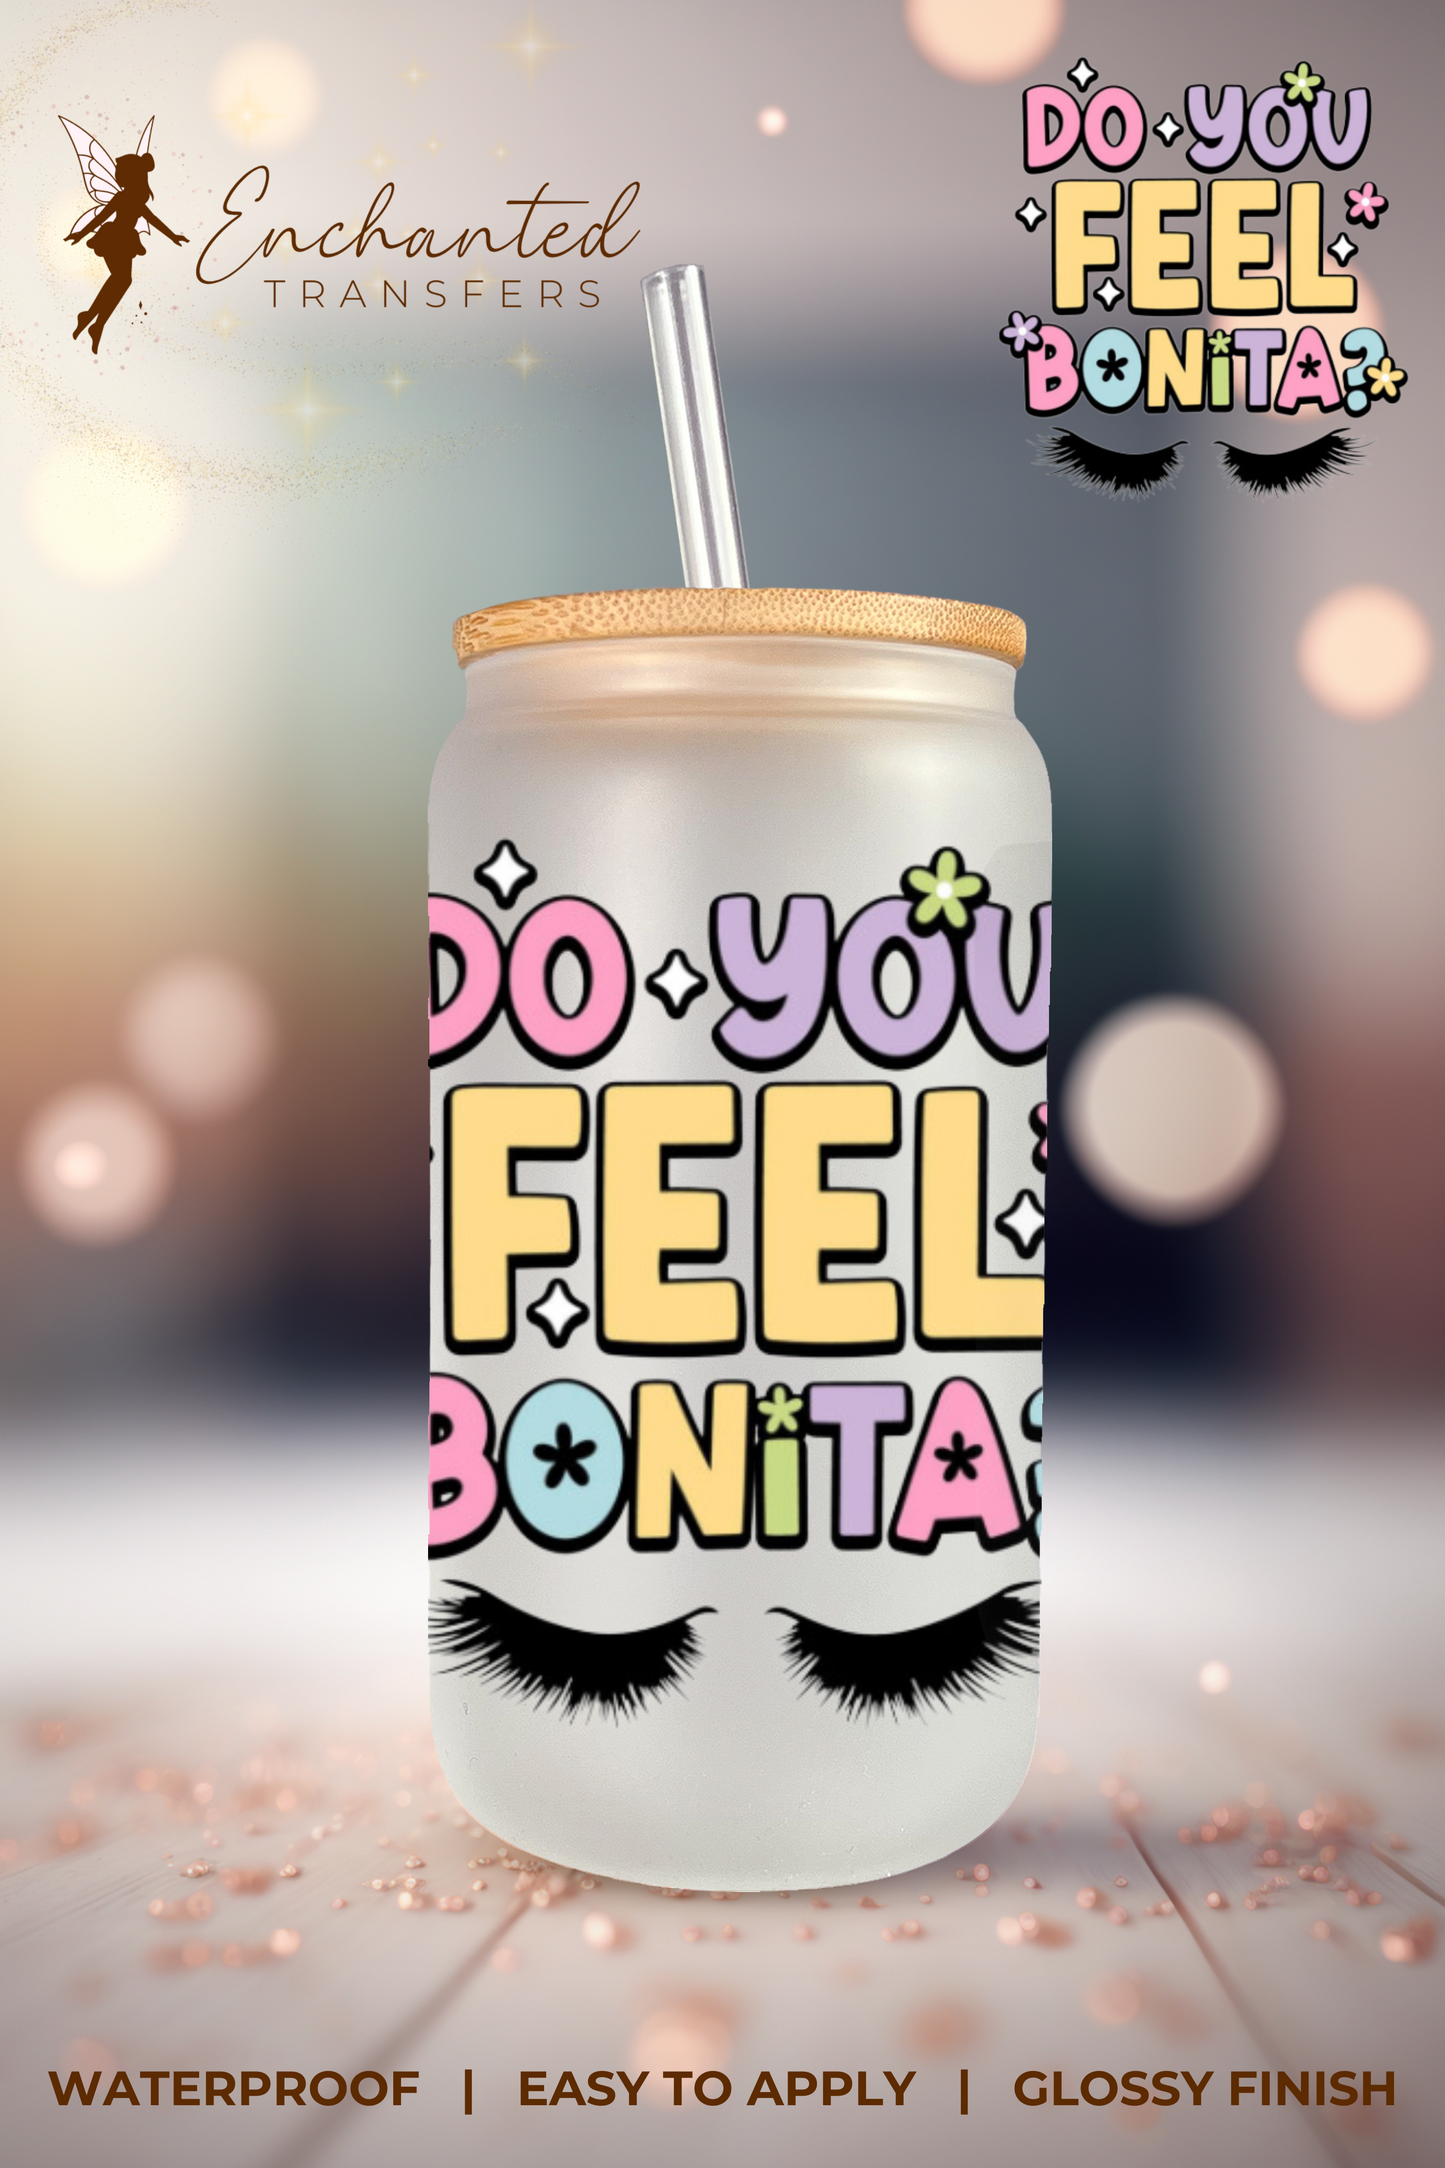 DO YOU FEEL BONITA? (Decal)